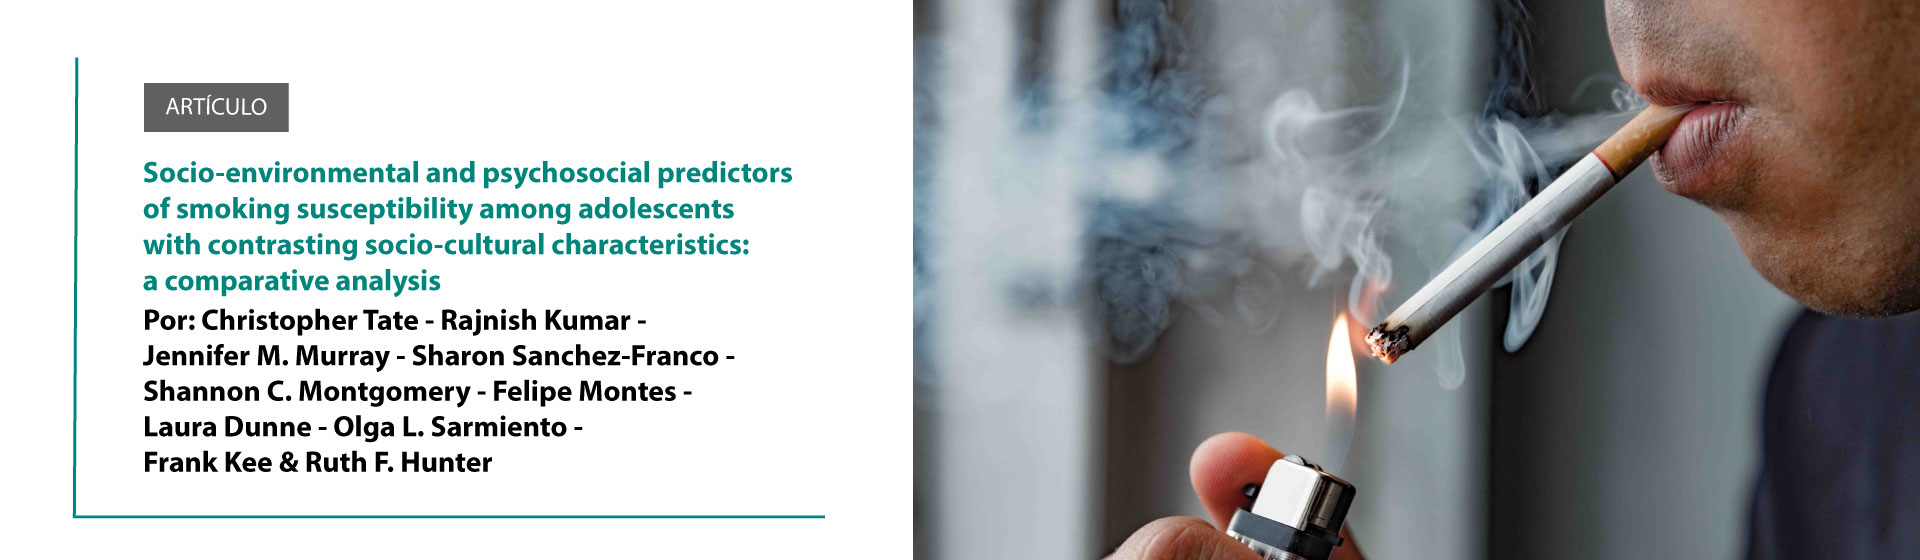 Socio-environmental and psychosocial predictors of smoking susceptibility among adolescents with contrasting socio-cultural characteristics: a comparative analysis